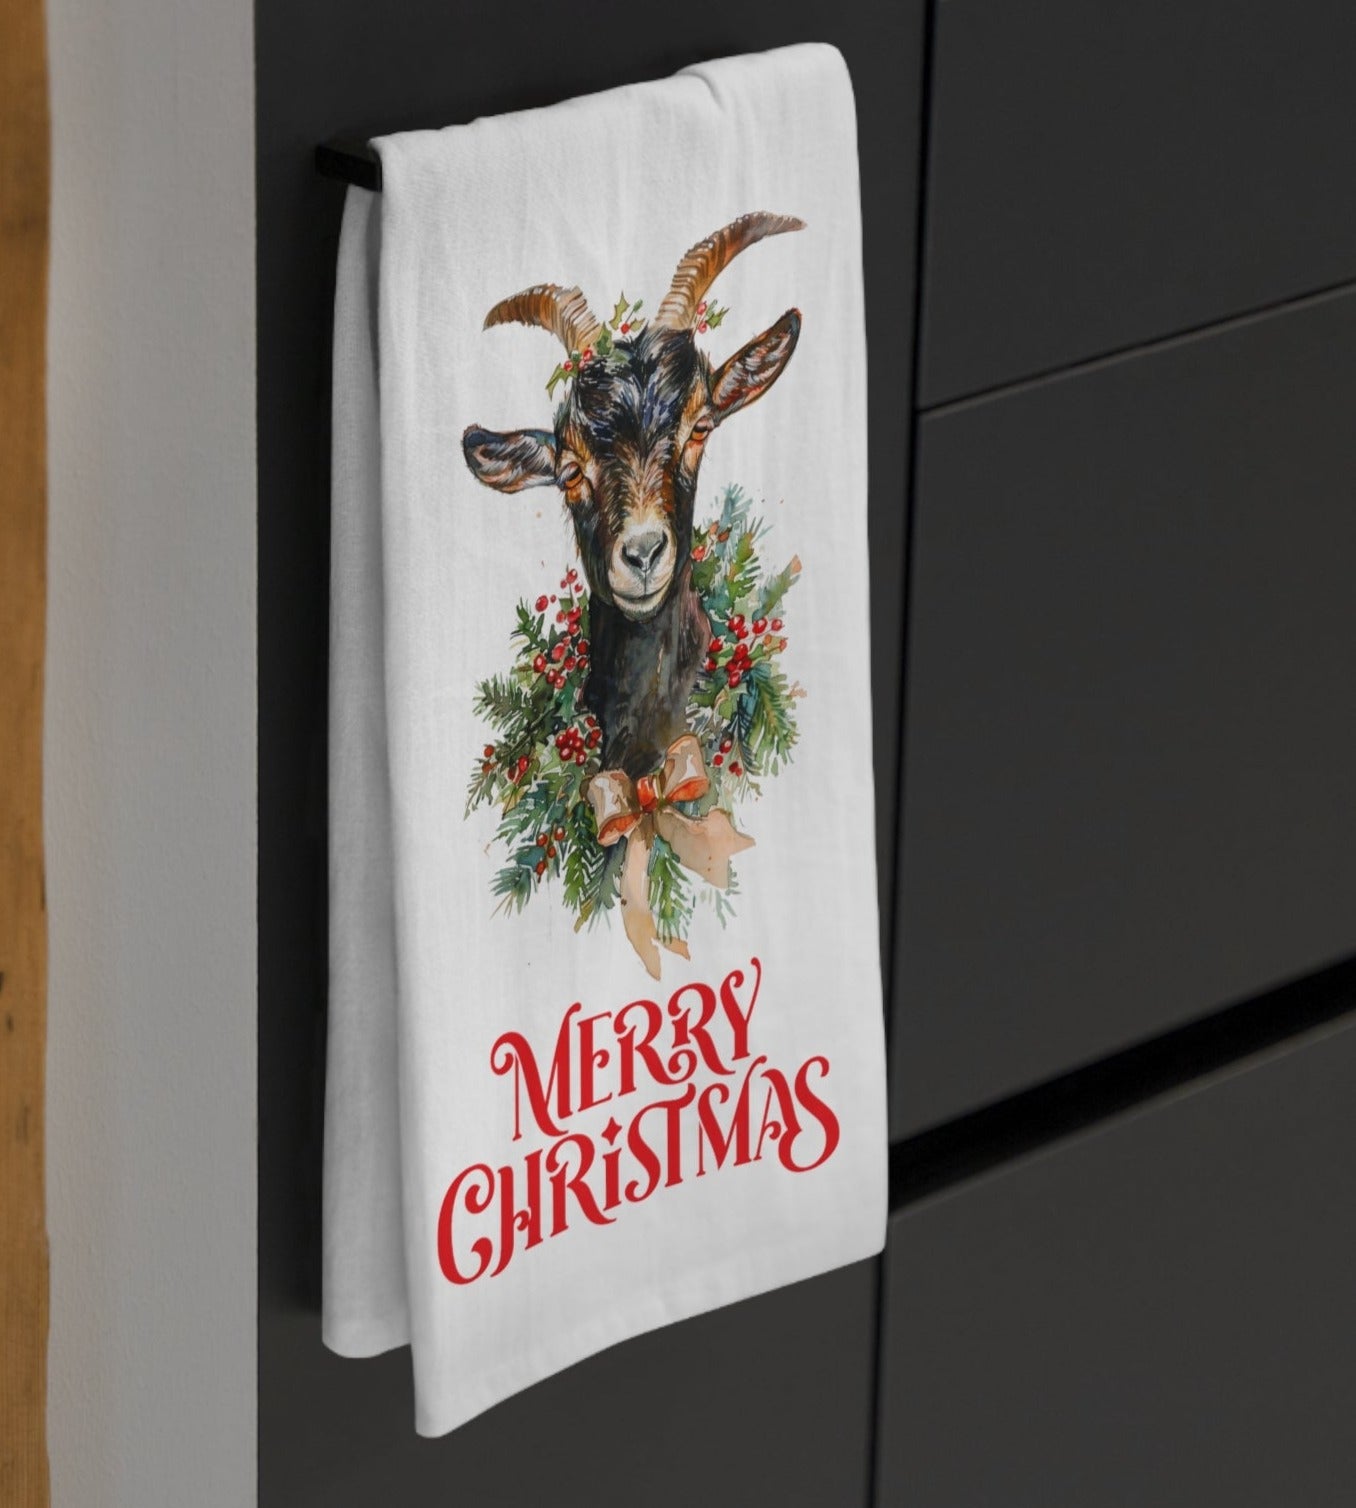 Cute Chrismas Goat Kitchen Tea Towel, Brown Baby Goat Holiday Decor - FlooredByArt